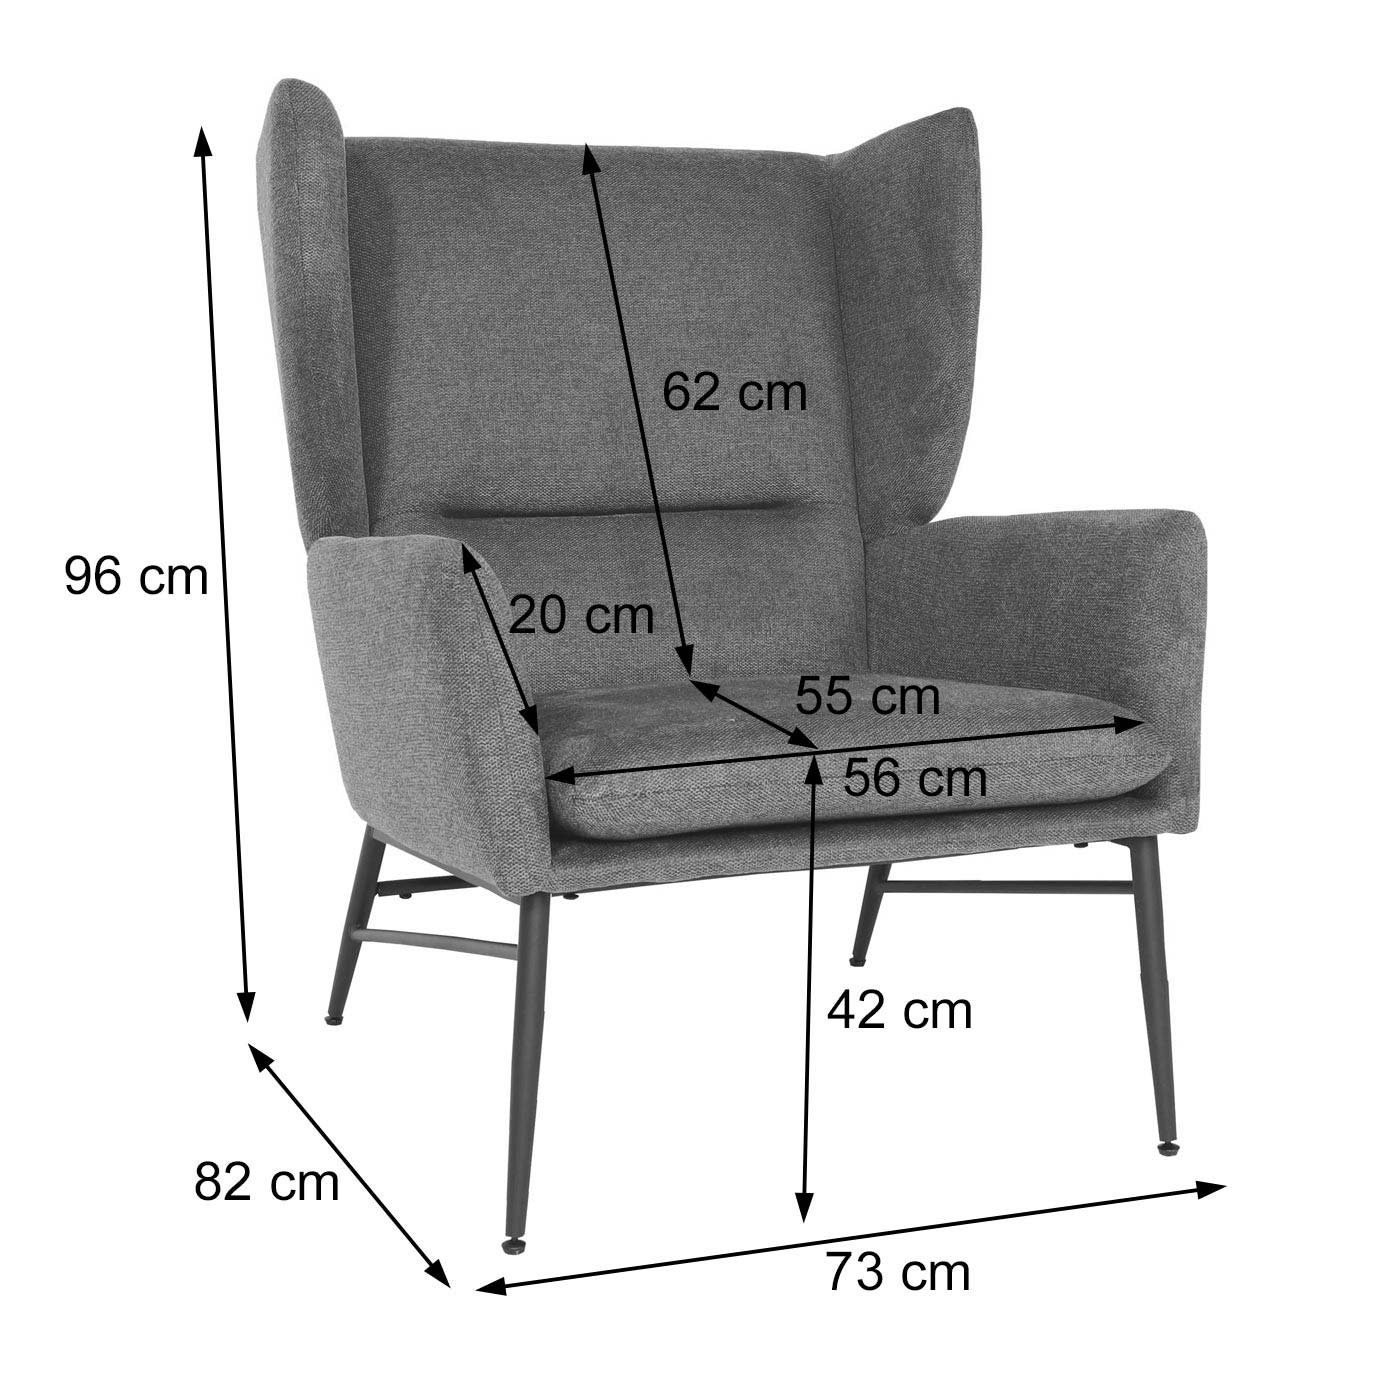 MCW-L62, breite Extra MCW Loungesessel abnehmbar Sitzfläche, terracotta-braun Sitzkissen